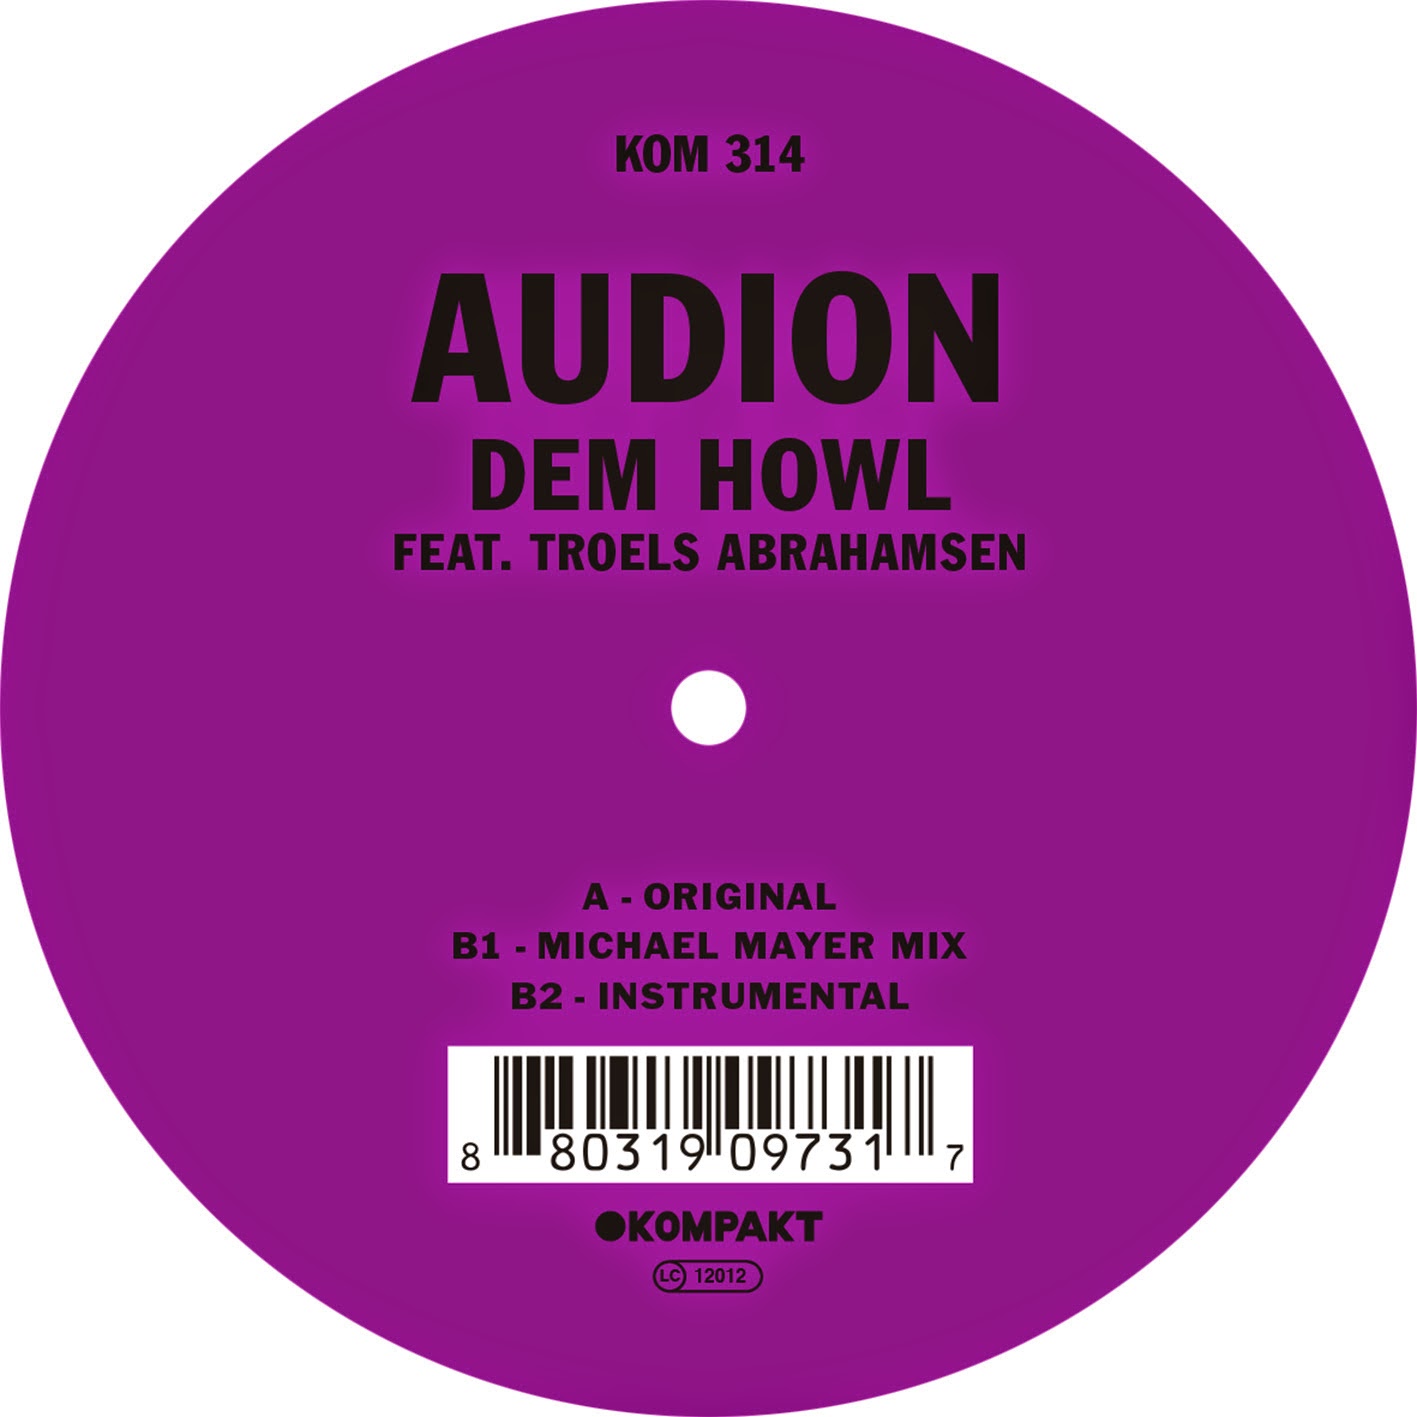 AUDION - DEM HOWL featuring TROELS ABRAHAMSEN